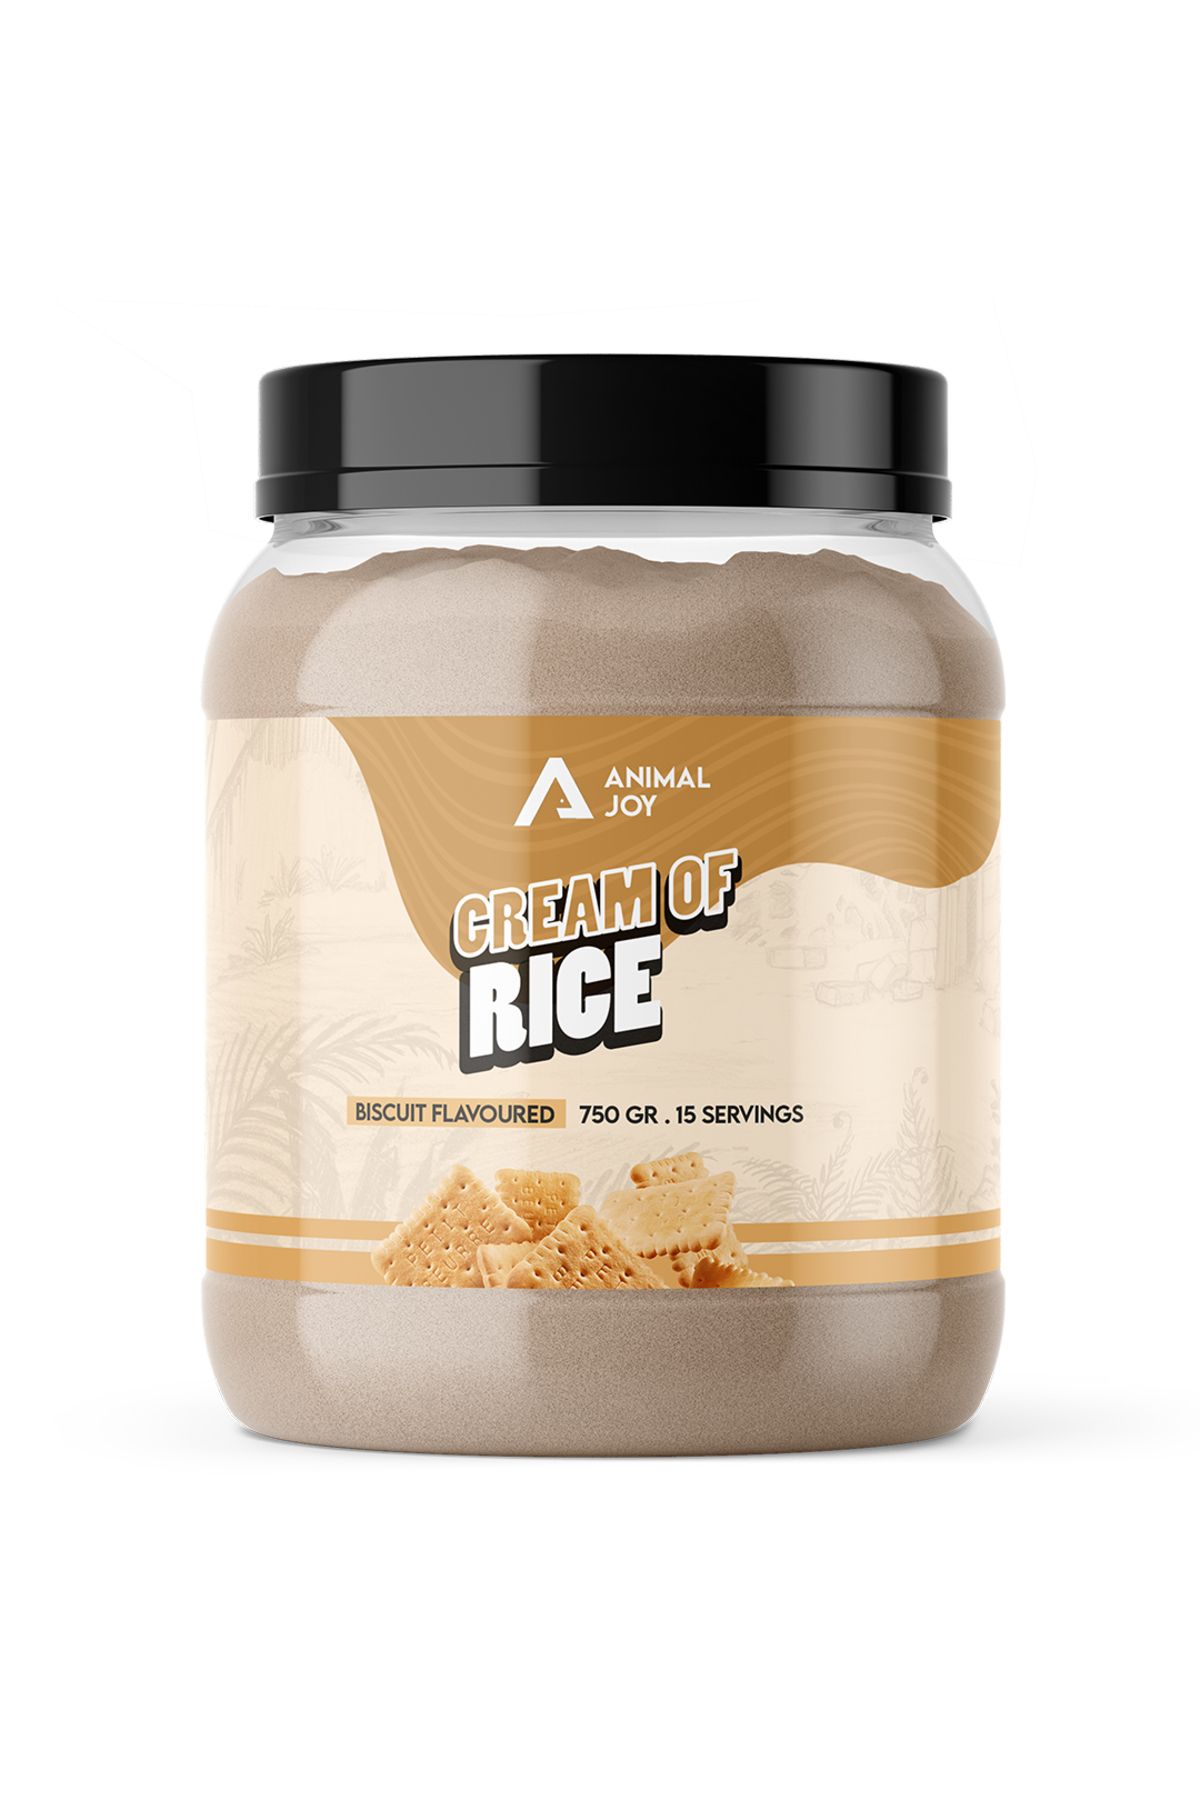 Animal Joy Cream Of Rice - Pirinç Unu Kreması - Bisküvi - 750 gr - 15 servis